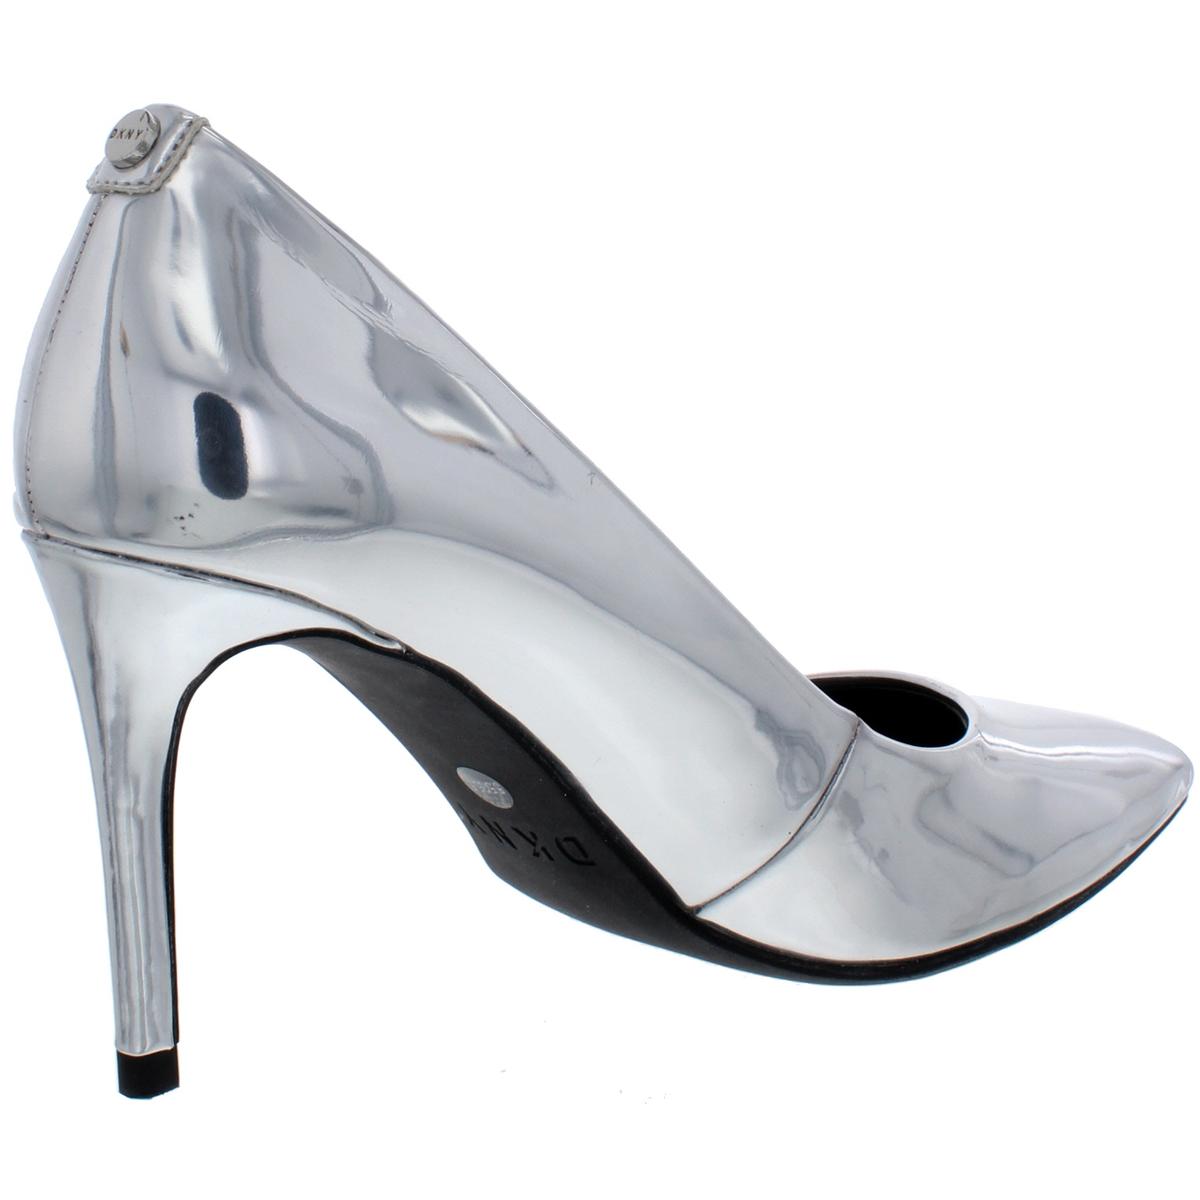 DKNY Womens Letty Pump Silver Evening Heels Shoes 5.5 Medium (B,M) BHFO ...